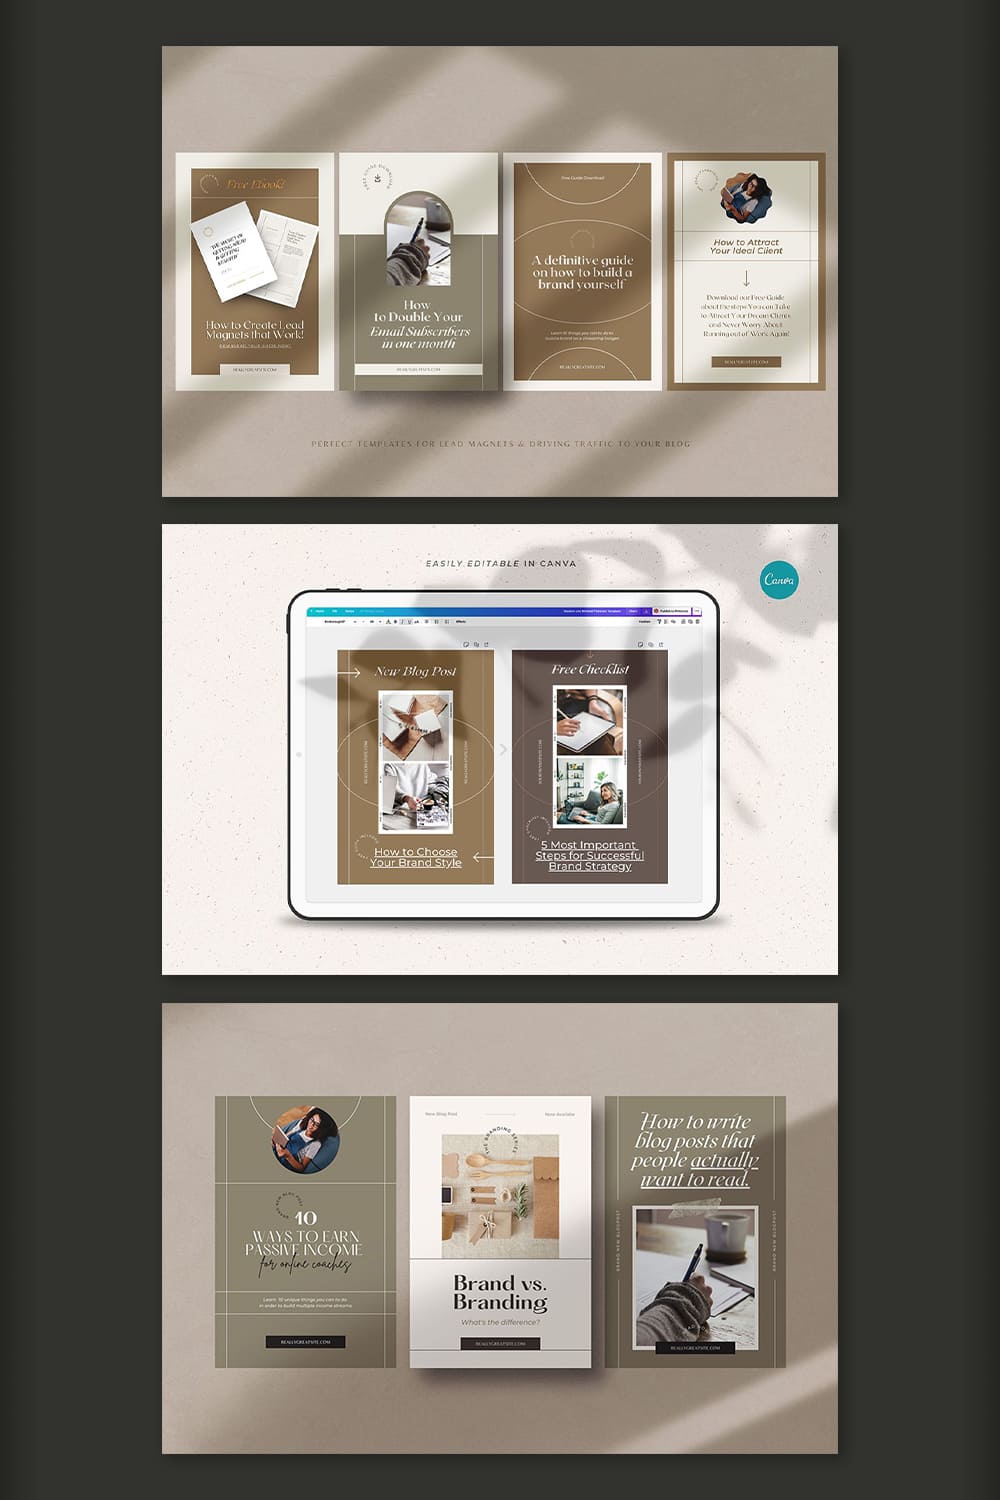 Aesthetic Pinterest Templates - Easily Editable In Canva.